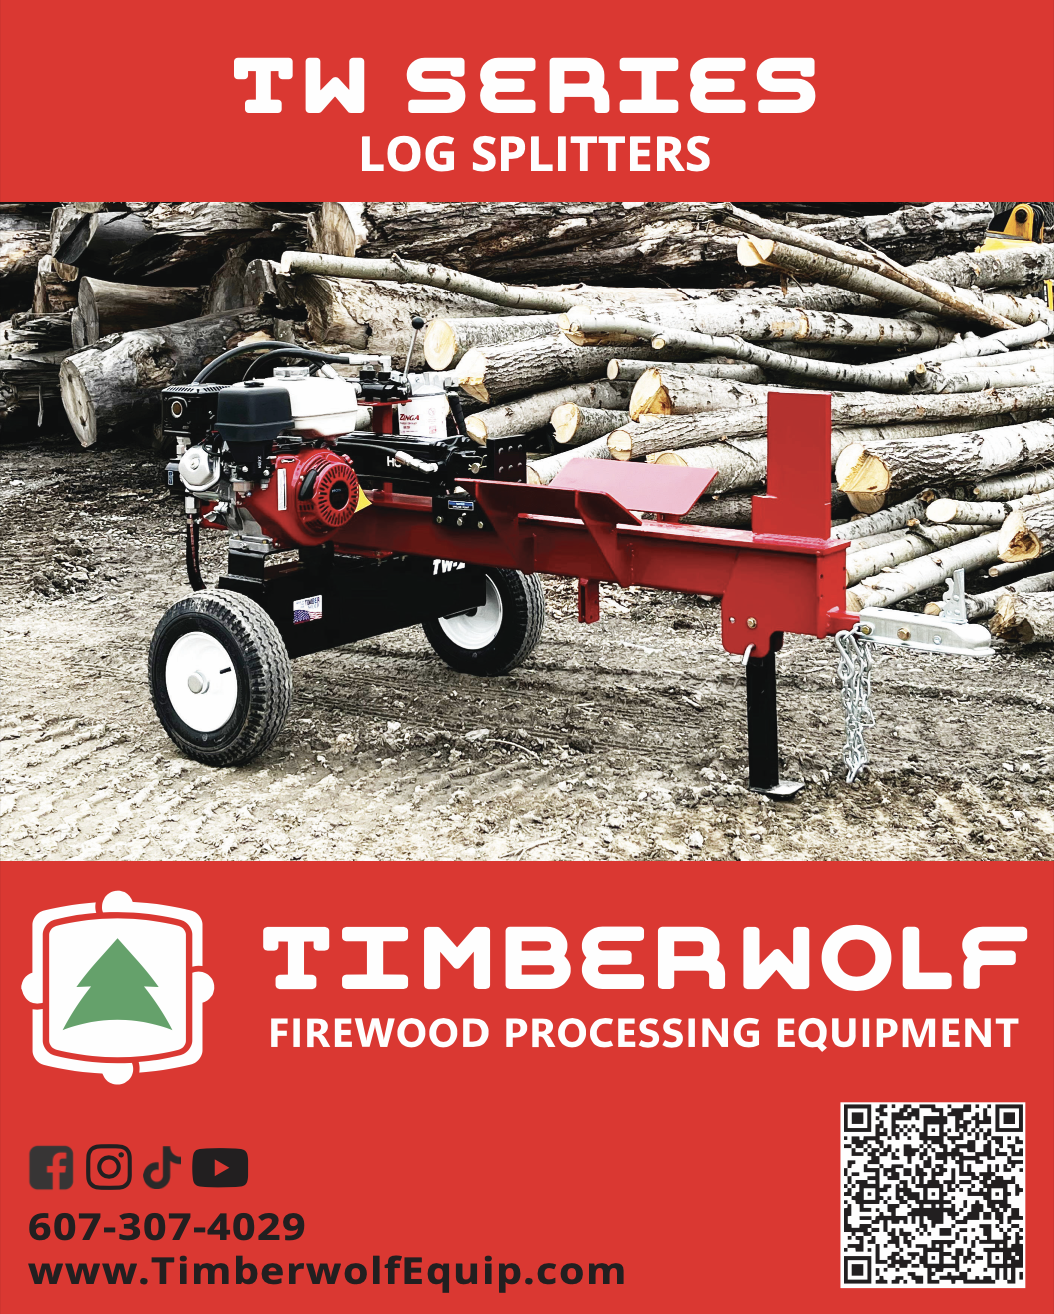 Timberwolf Firewood Processing Equipment TW Series Log Splitter Technical Specifications Brochure Download